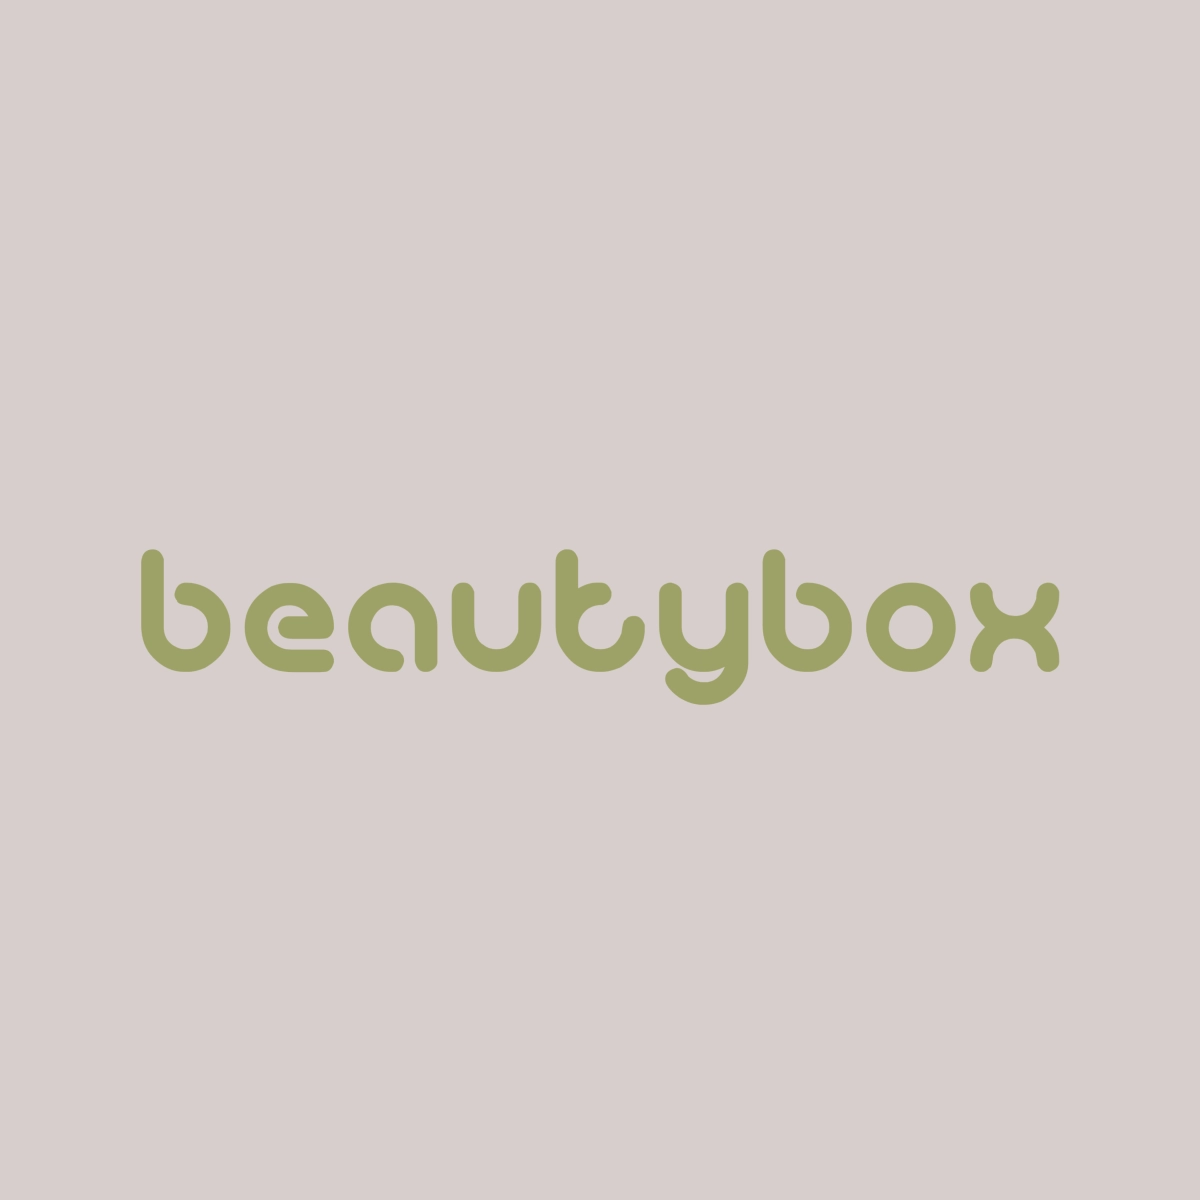 BeautyBox Opensolariums background